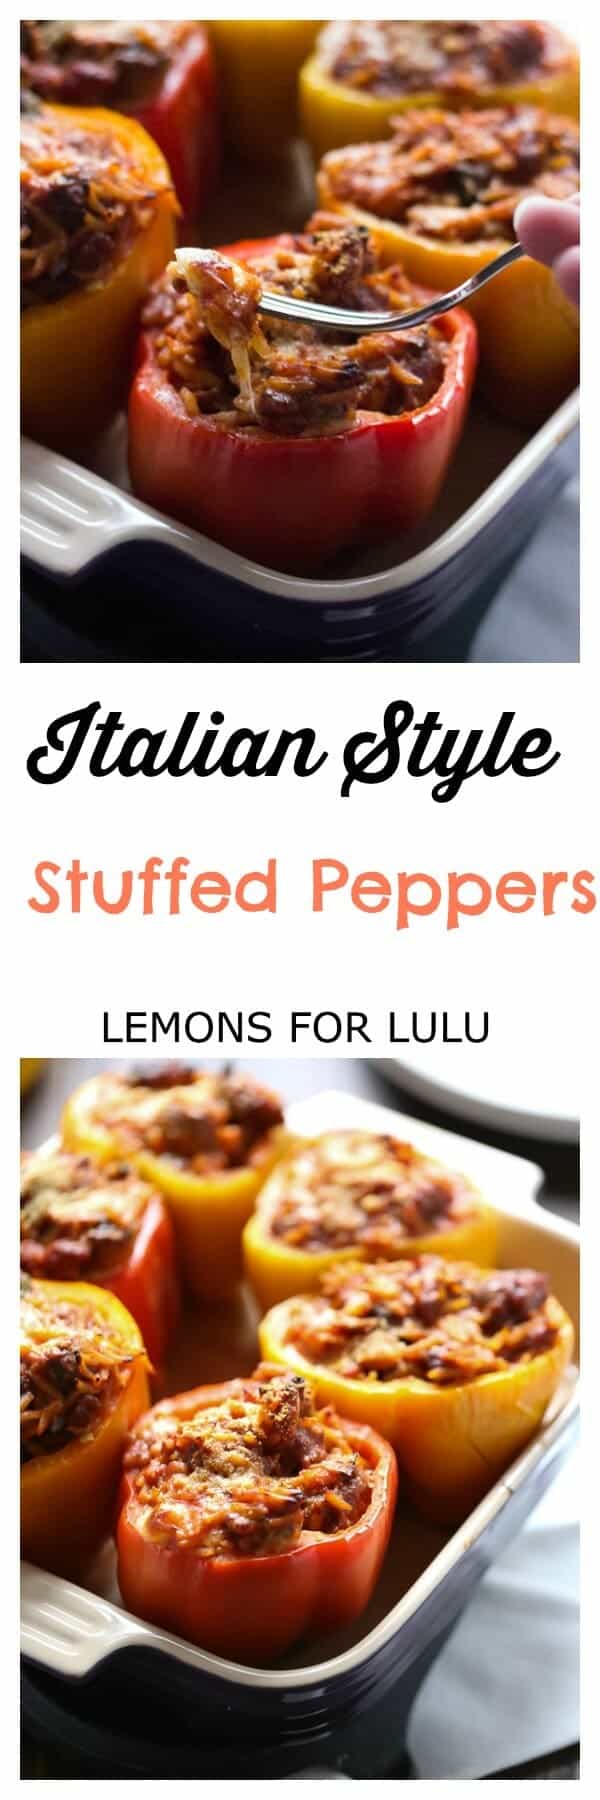 Italian Style Stuffed Peppers - LemonsforLulu.com